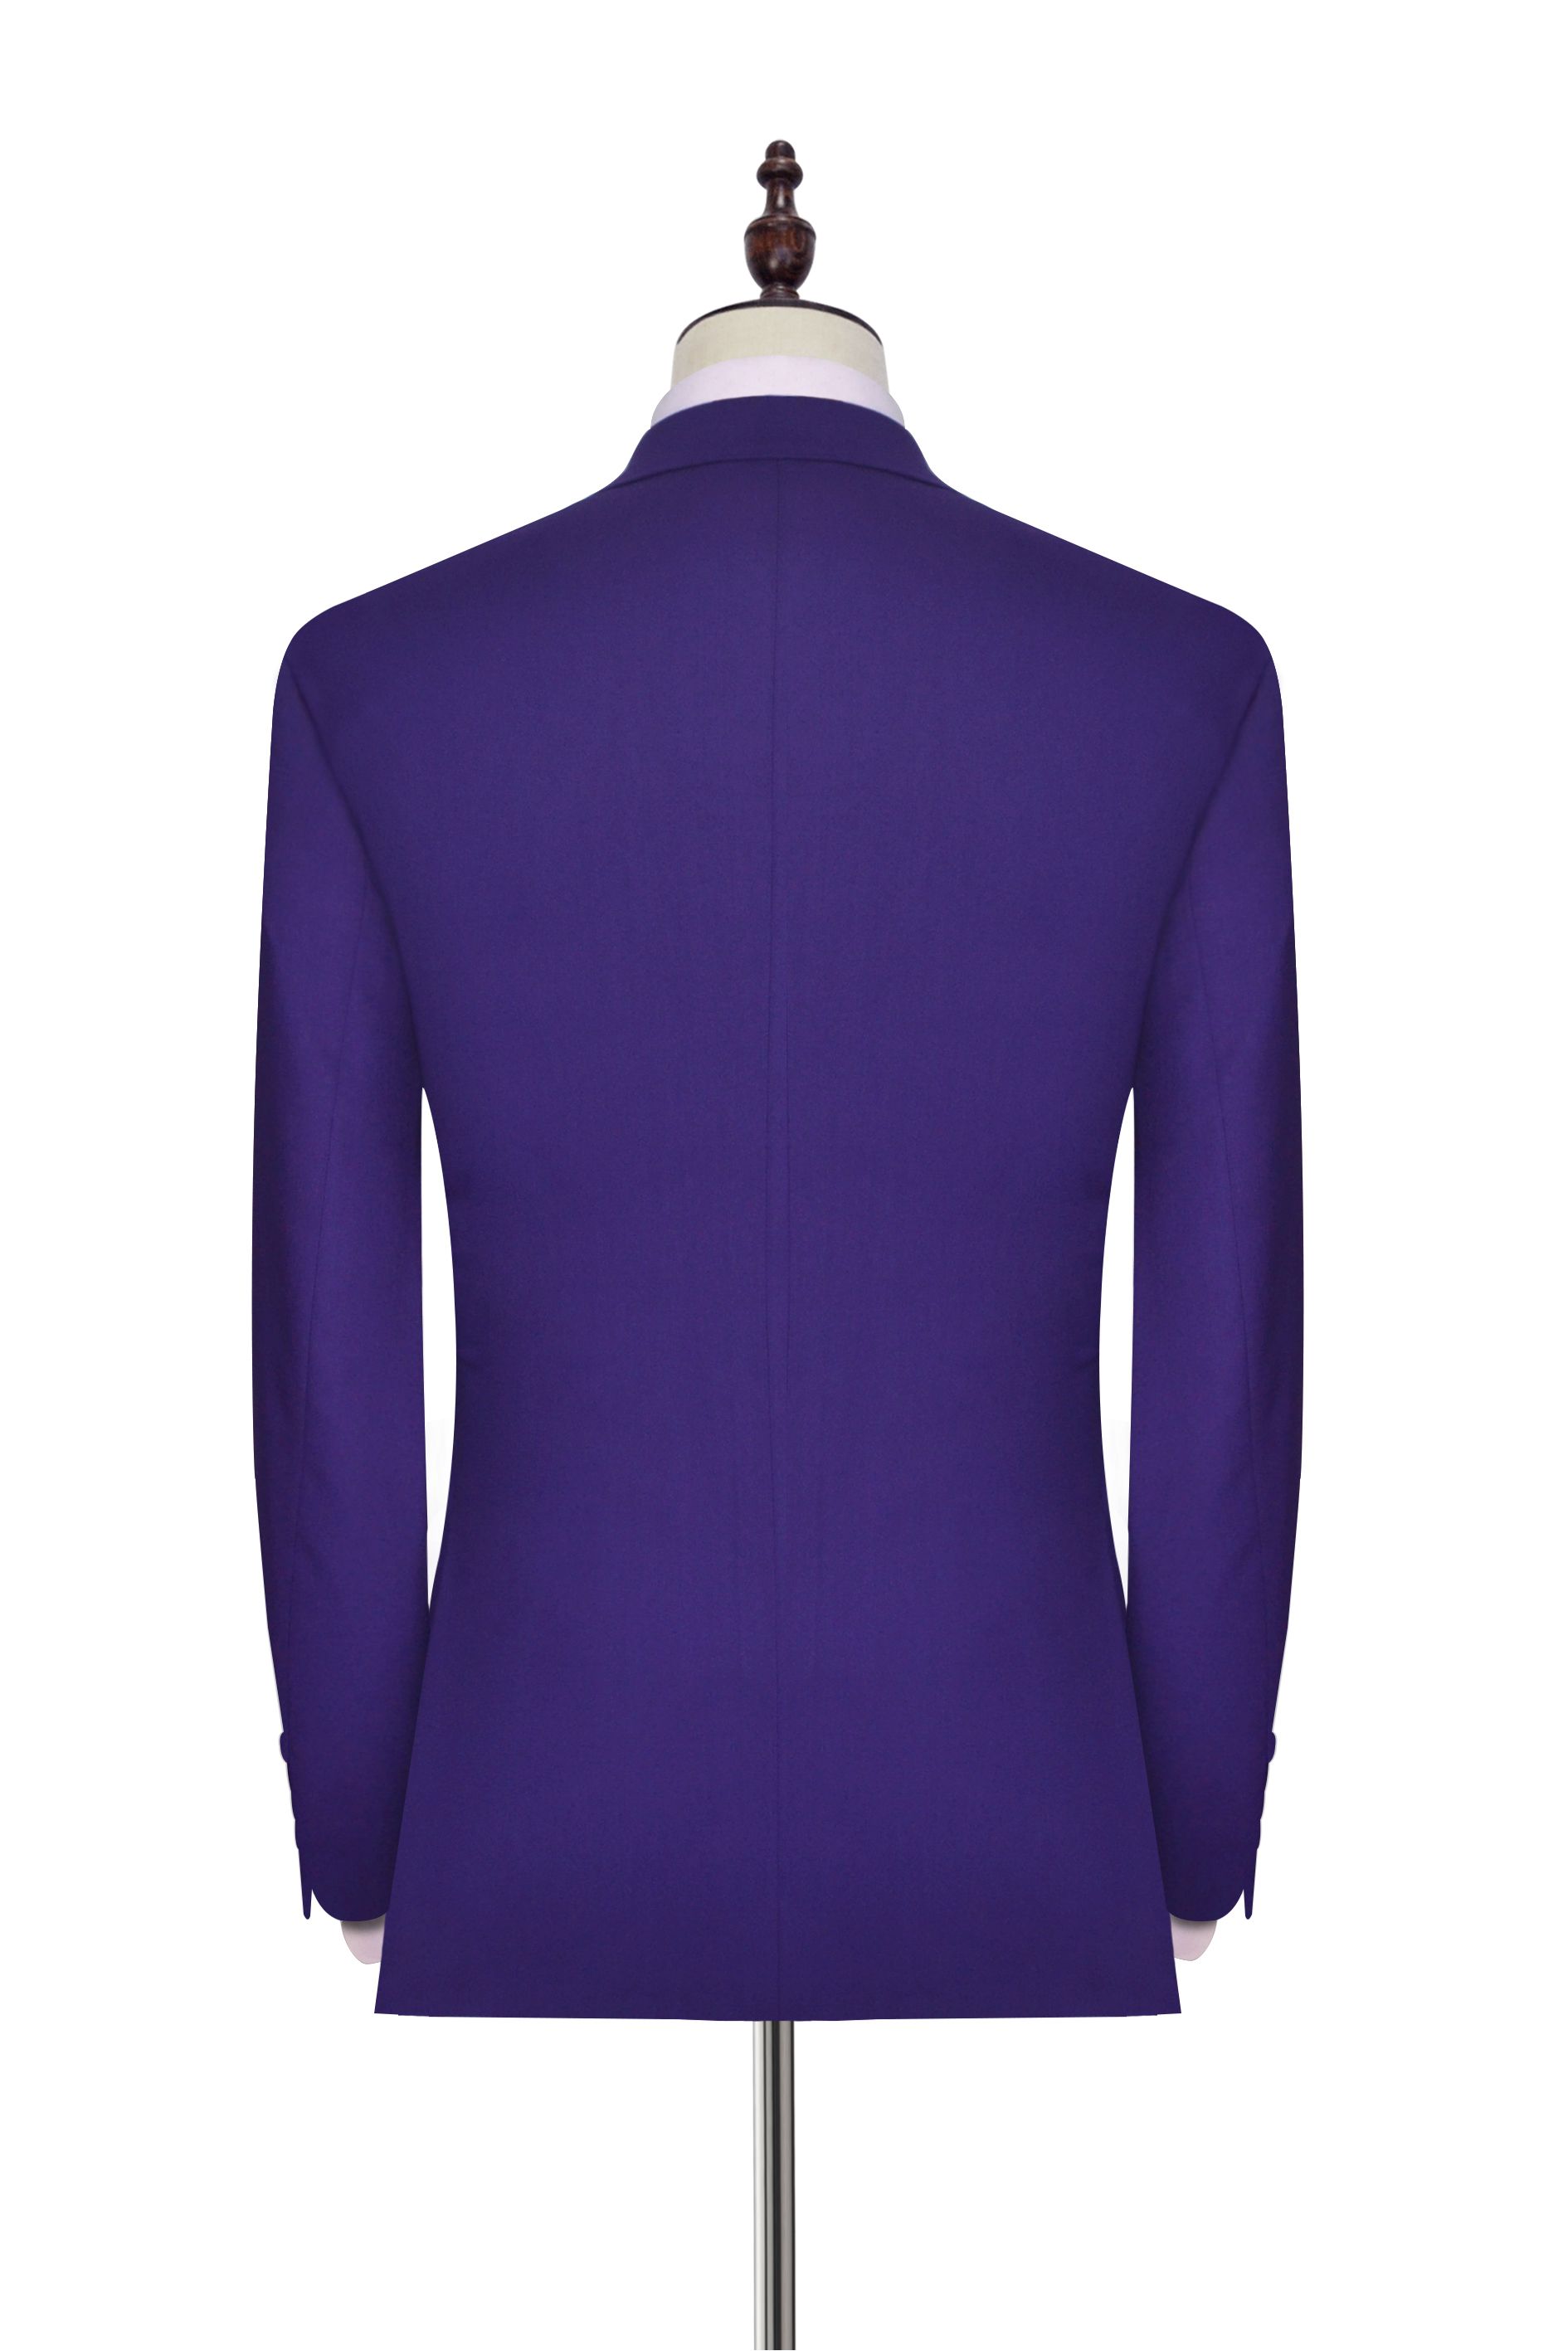 Purple black collar wool Peak lapel three-piece wedding suit for groom 